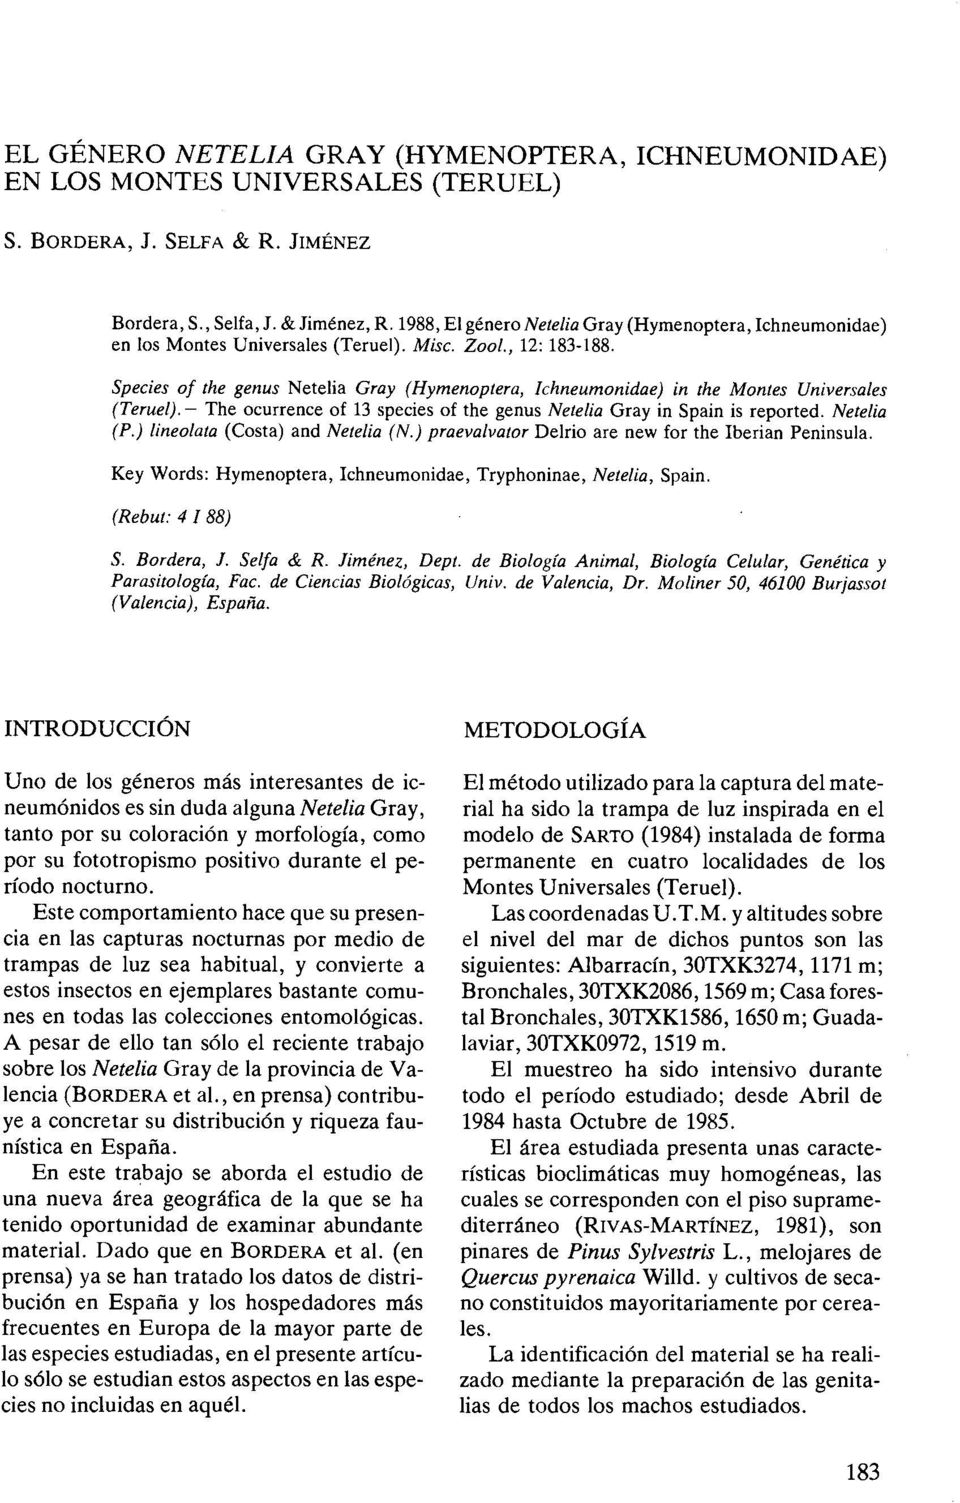 Species of the genus Netelia Gray (Hymenoptera, Ichneumonidae) in the Montes Universales (Teruel). - The ocurrence of 13 species of the genus Netelia Gray in Spain is reported. Netelia (P.